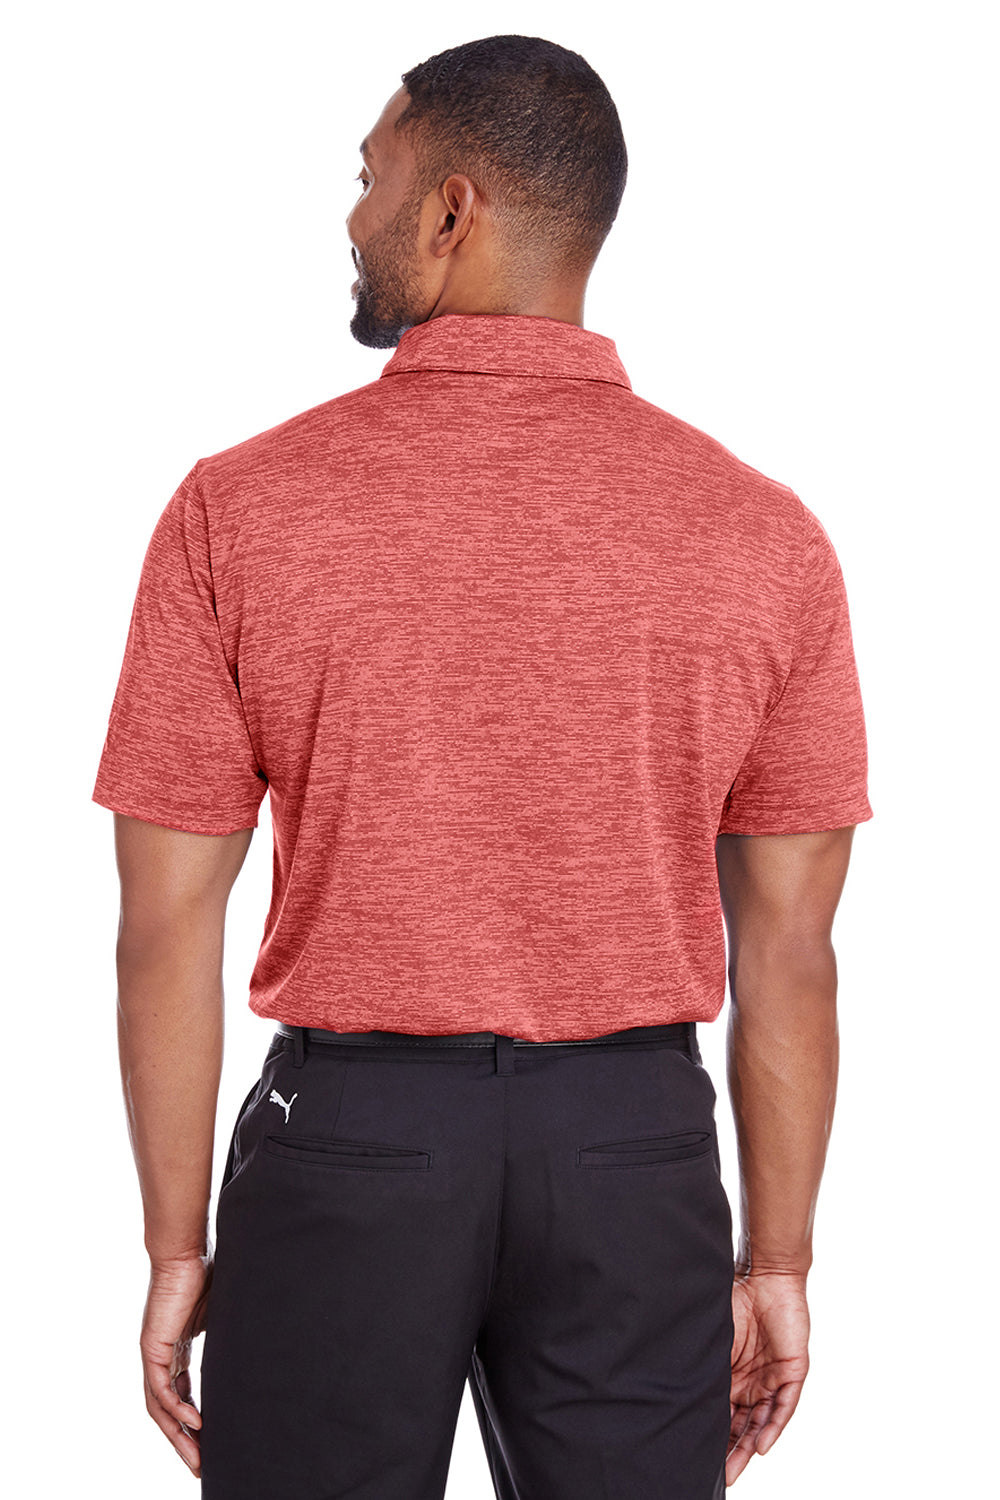 Puma 596801 Mens Icon Performance Moisture Wicking Short Sleeve Polo Shirt Red Back